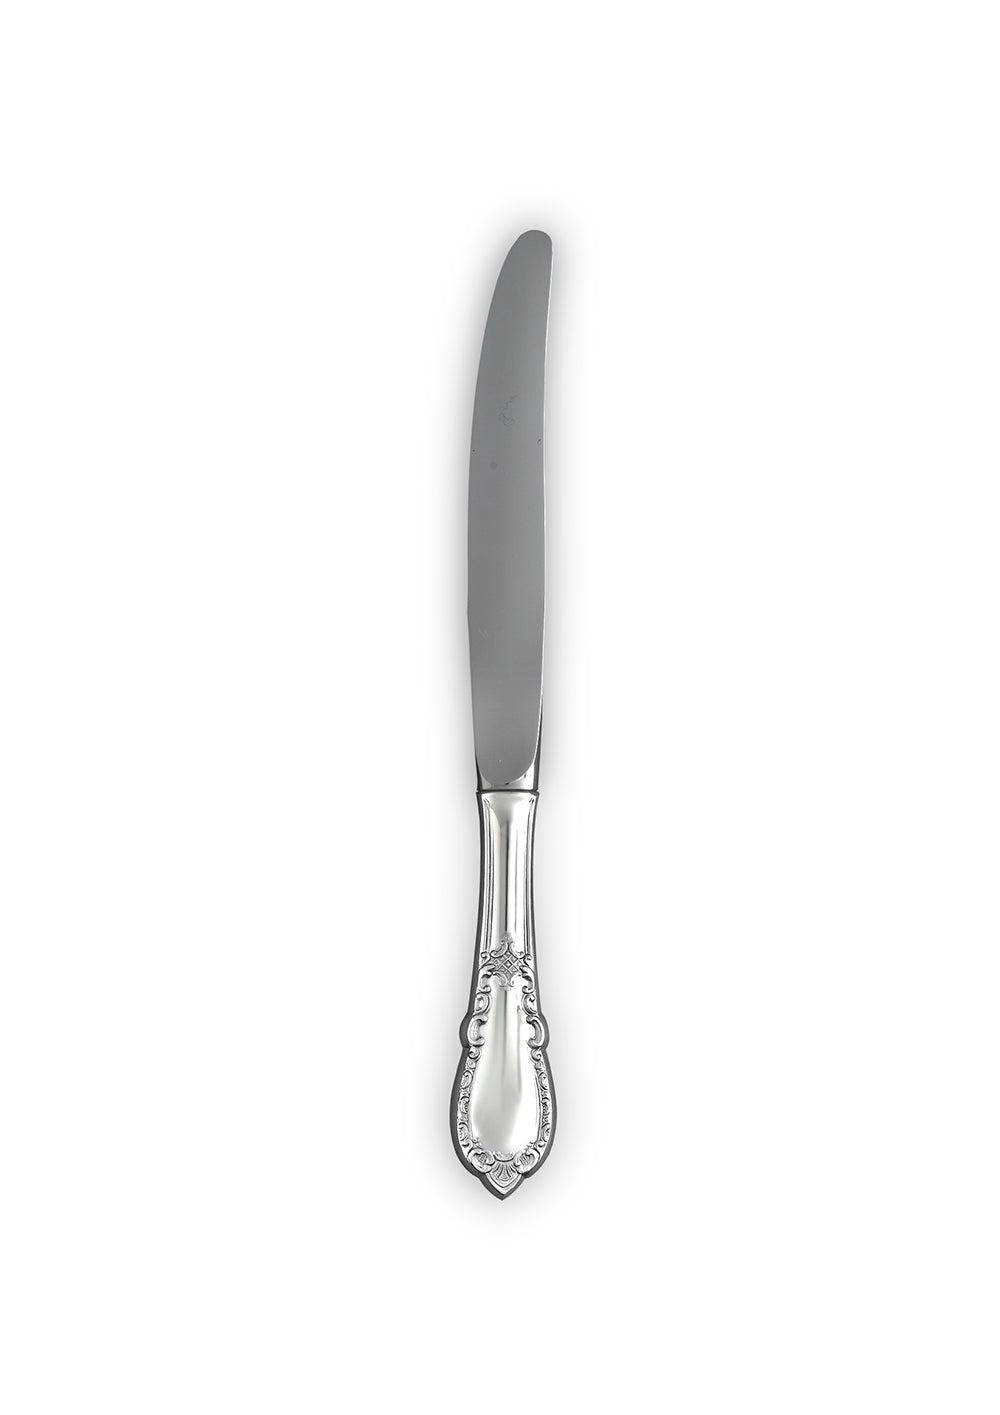 Noble large dining knife